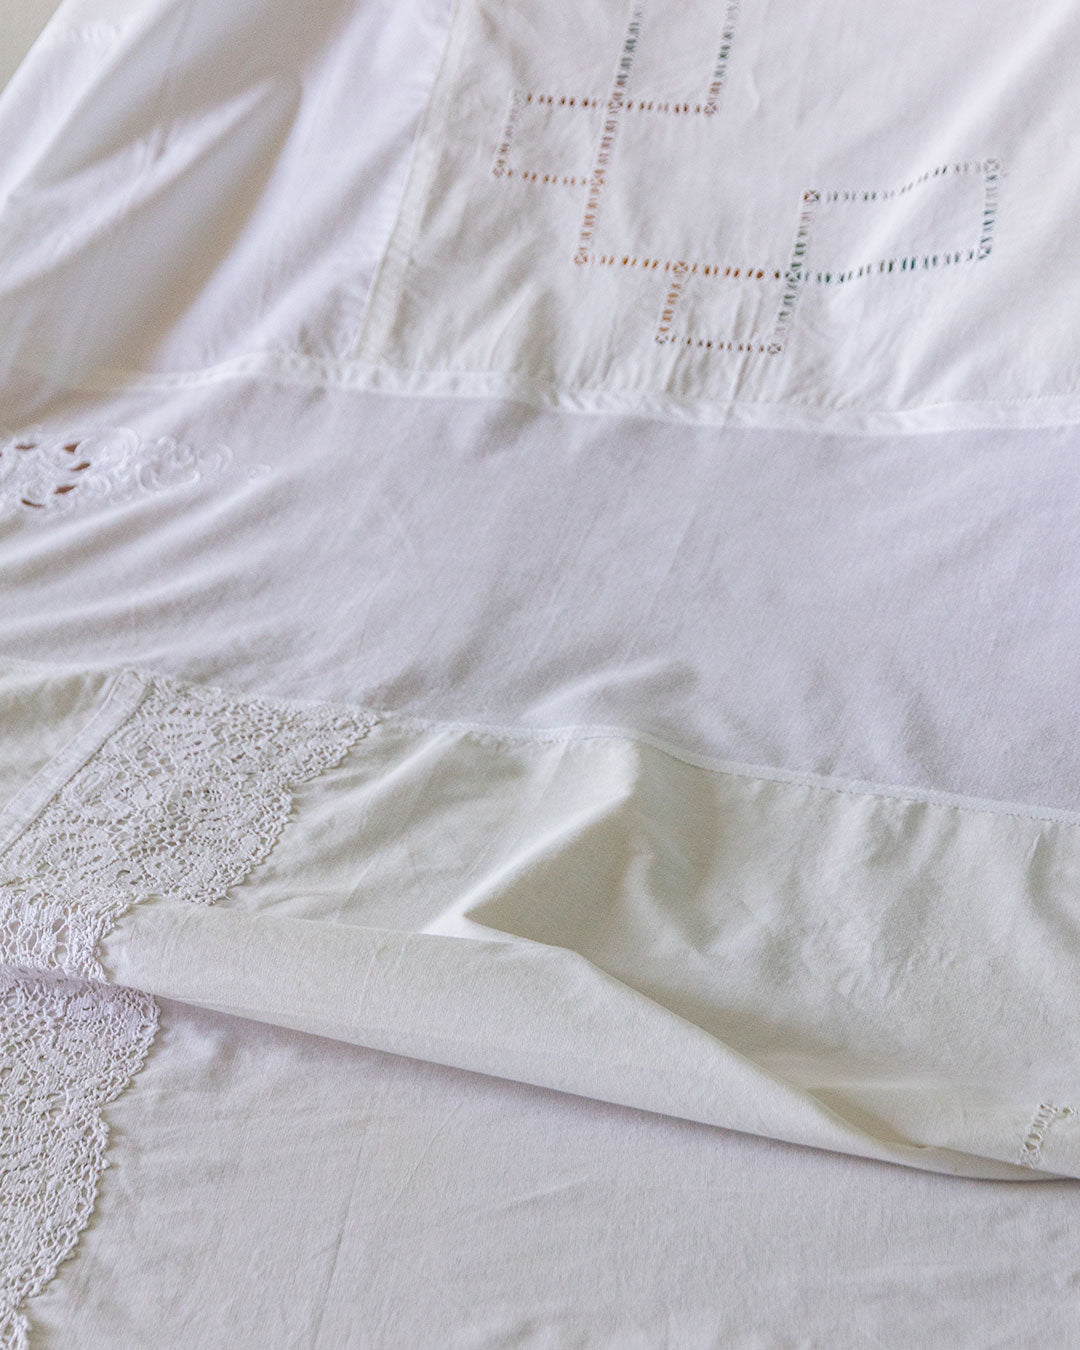 White lace tablecloth cotton Factory Melilli